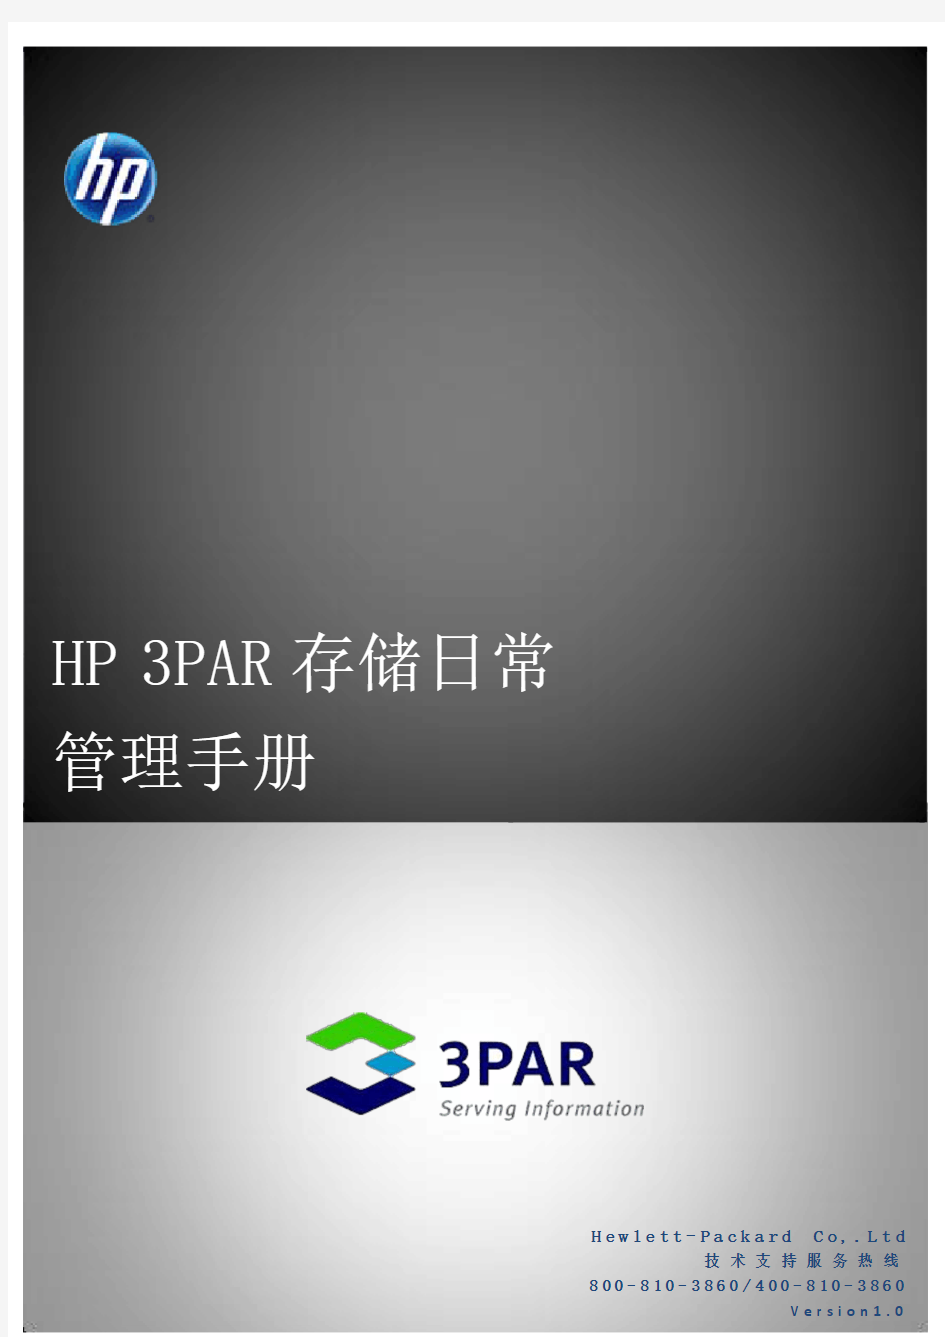 HP 3PAR存储日常管理手册v1.0